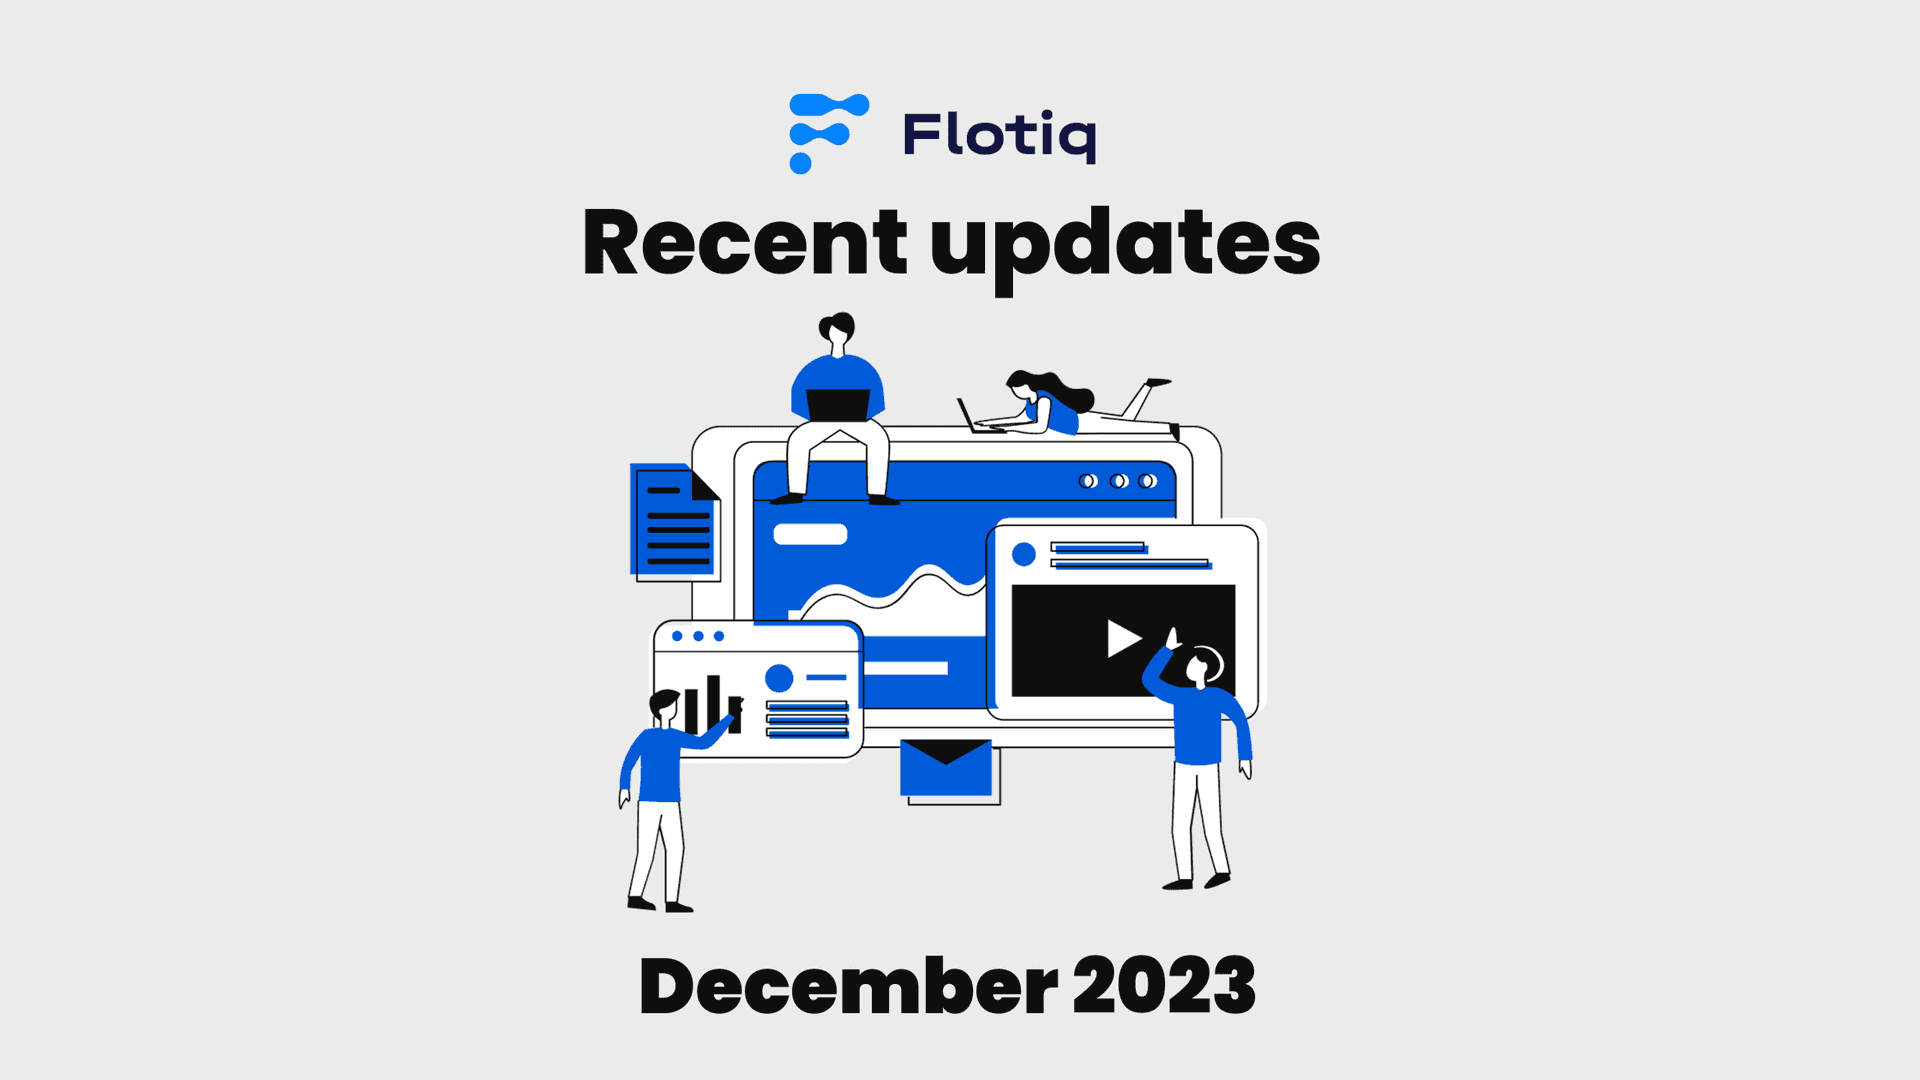 Recent updates in Flotiq (December 2023)